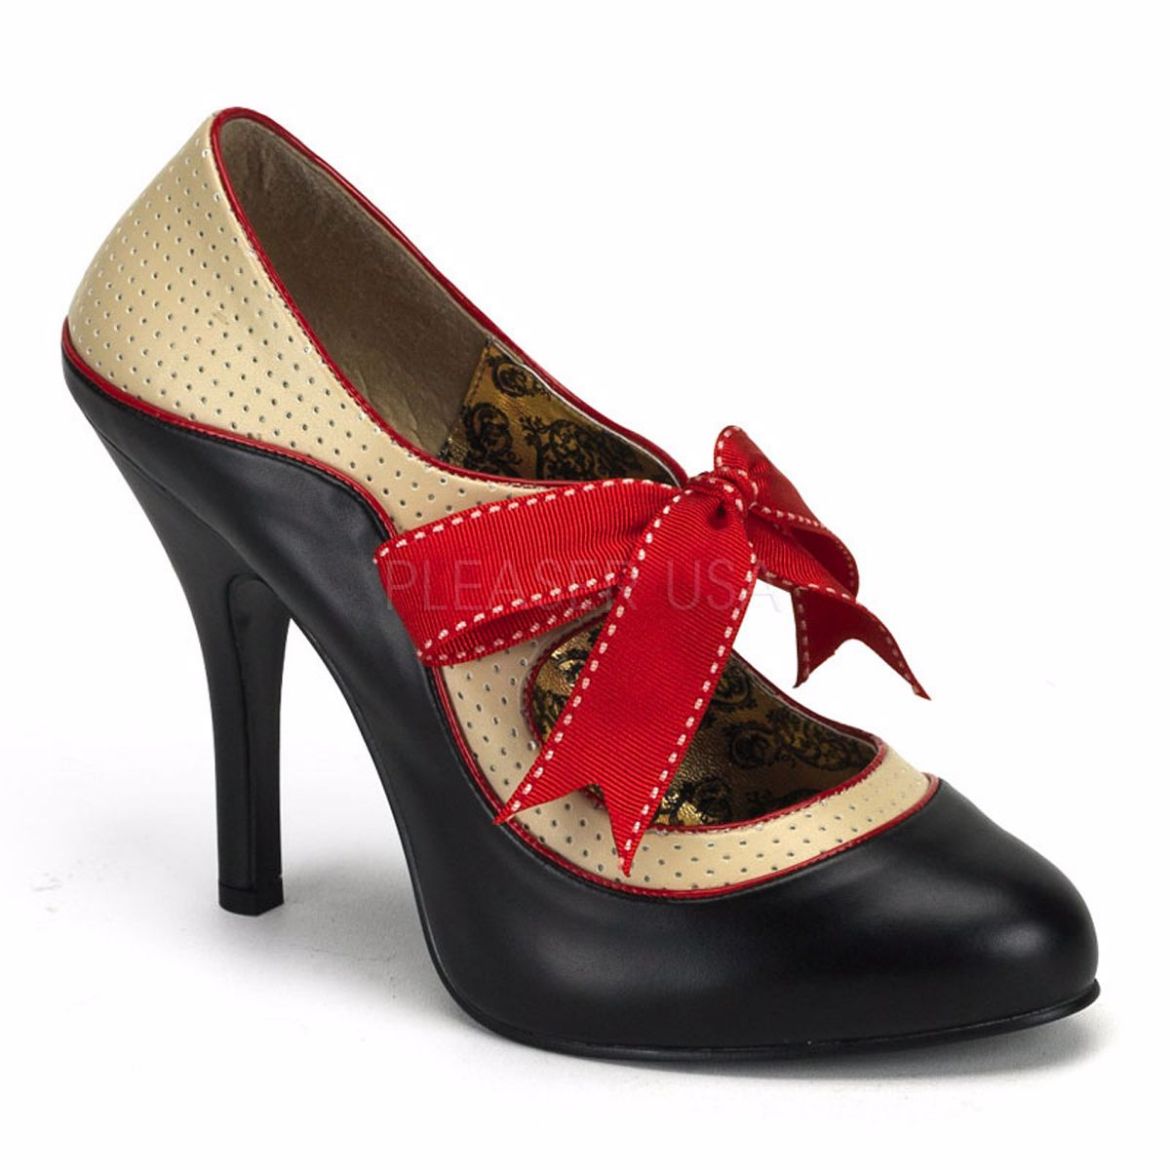 Product image of Bordello Tempt-27 Black-Cream Pu, 4 1/2 inch (11.4 cm) Heel, 1/2 inch (1.3 cm) Platform Court Pump Shoes